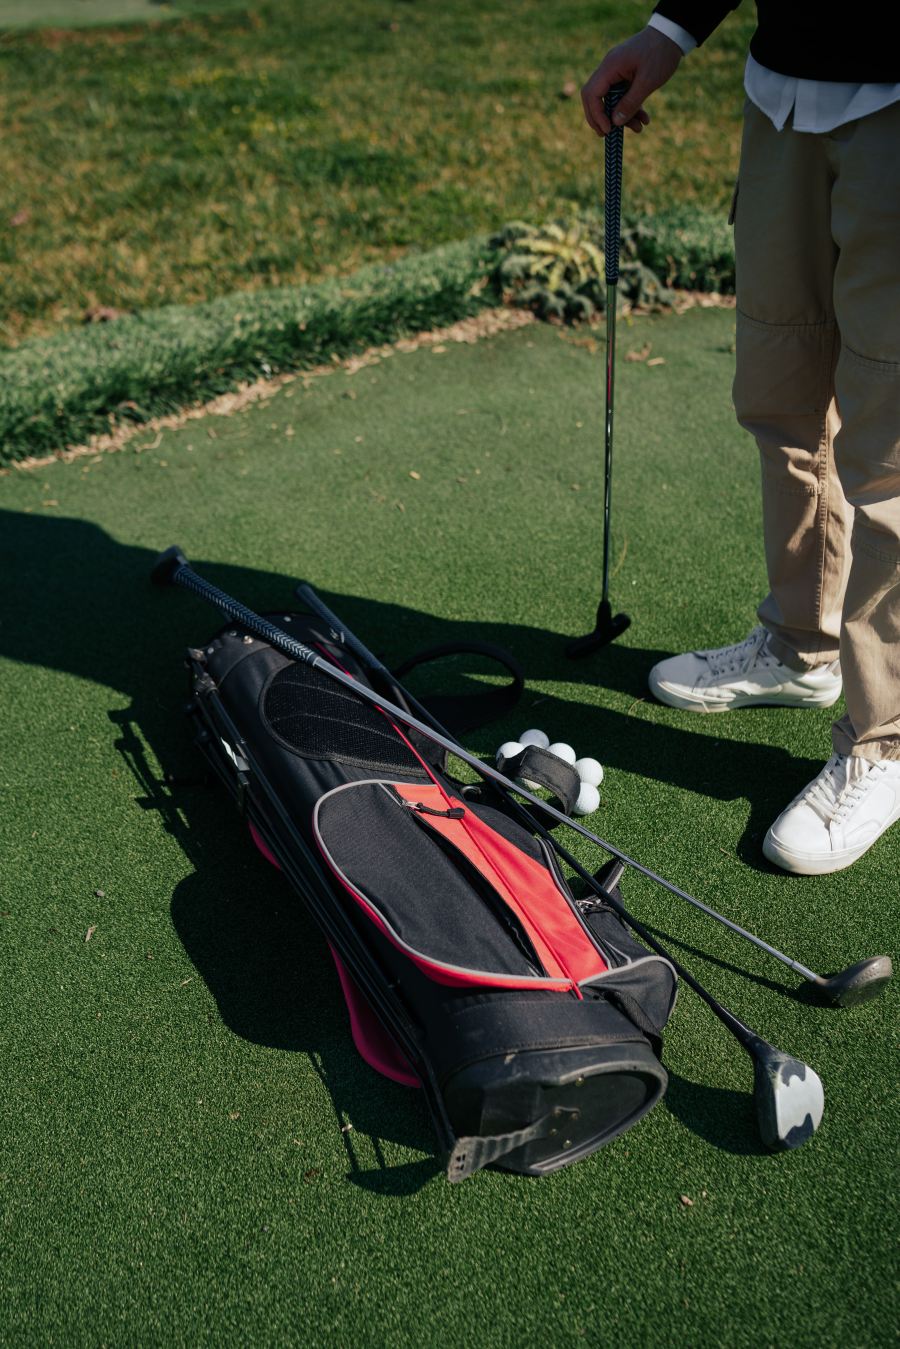 best golf bags for walking (credit: unsplash)